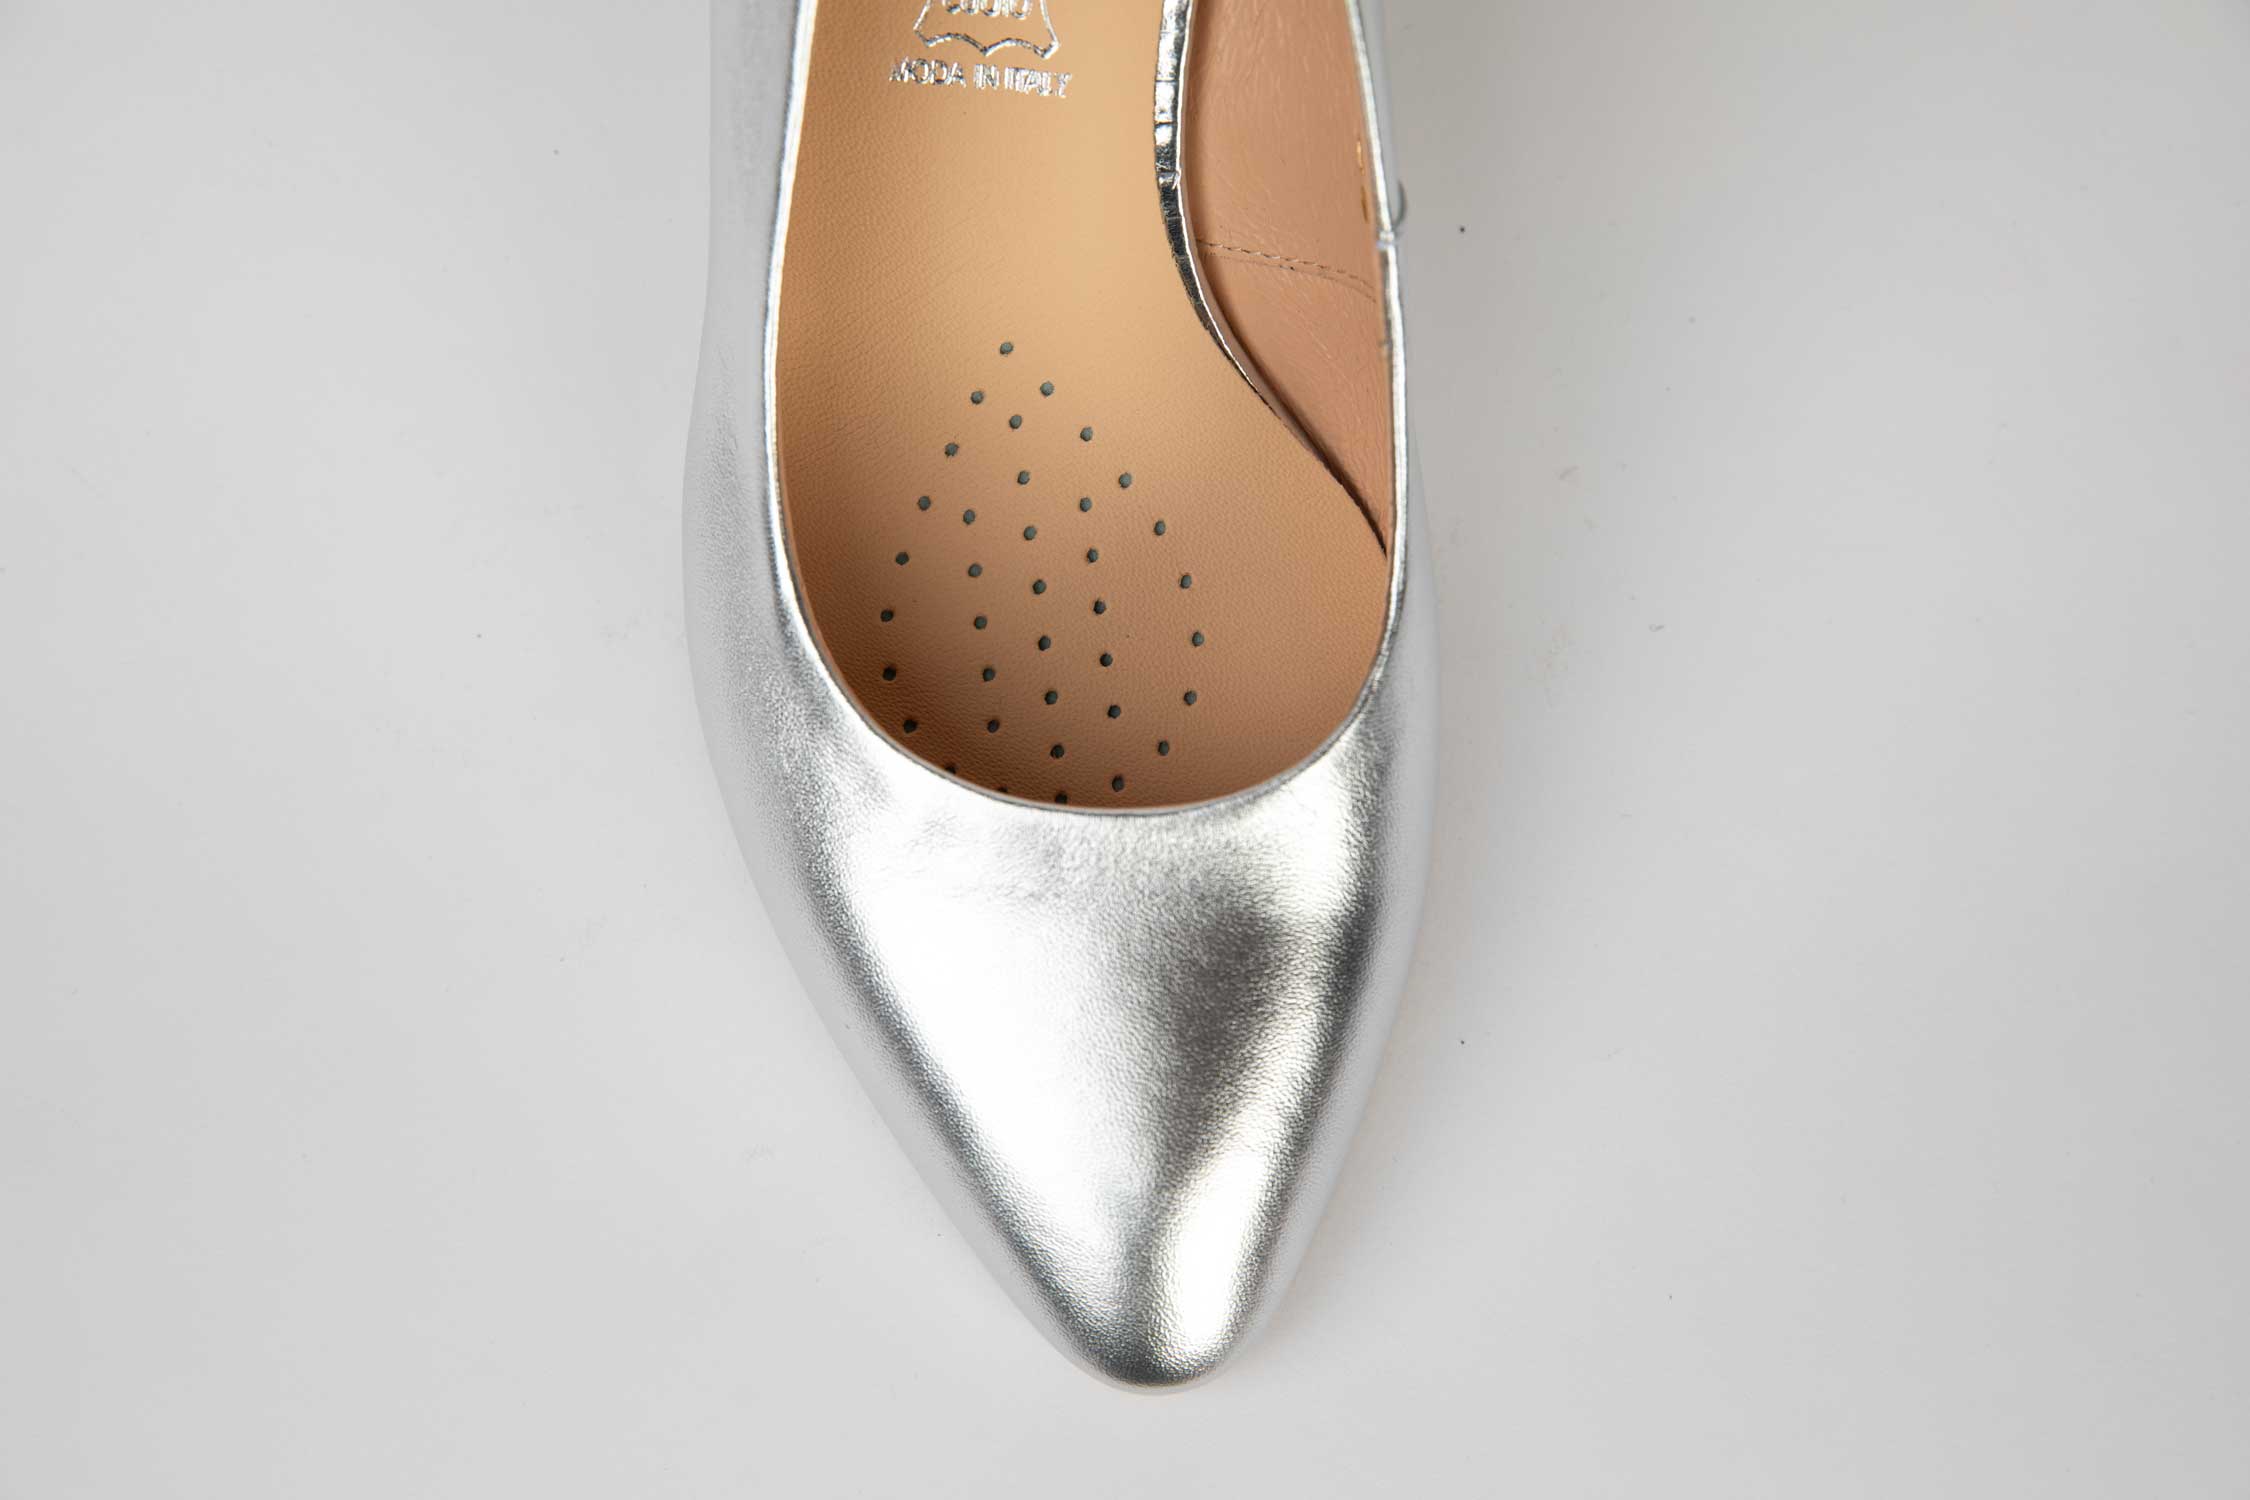 Pantofi dama decupati eleganti din piele naturala SALA 20006 argintiu